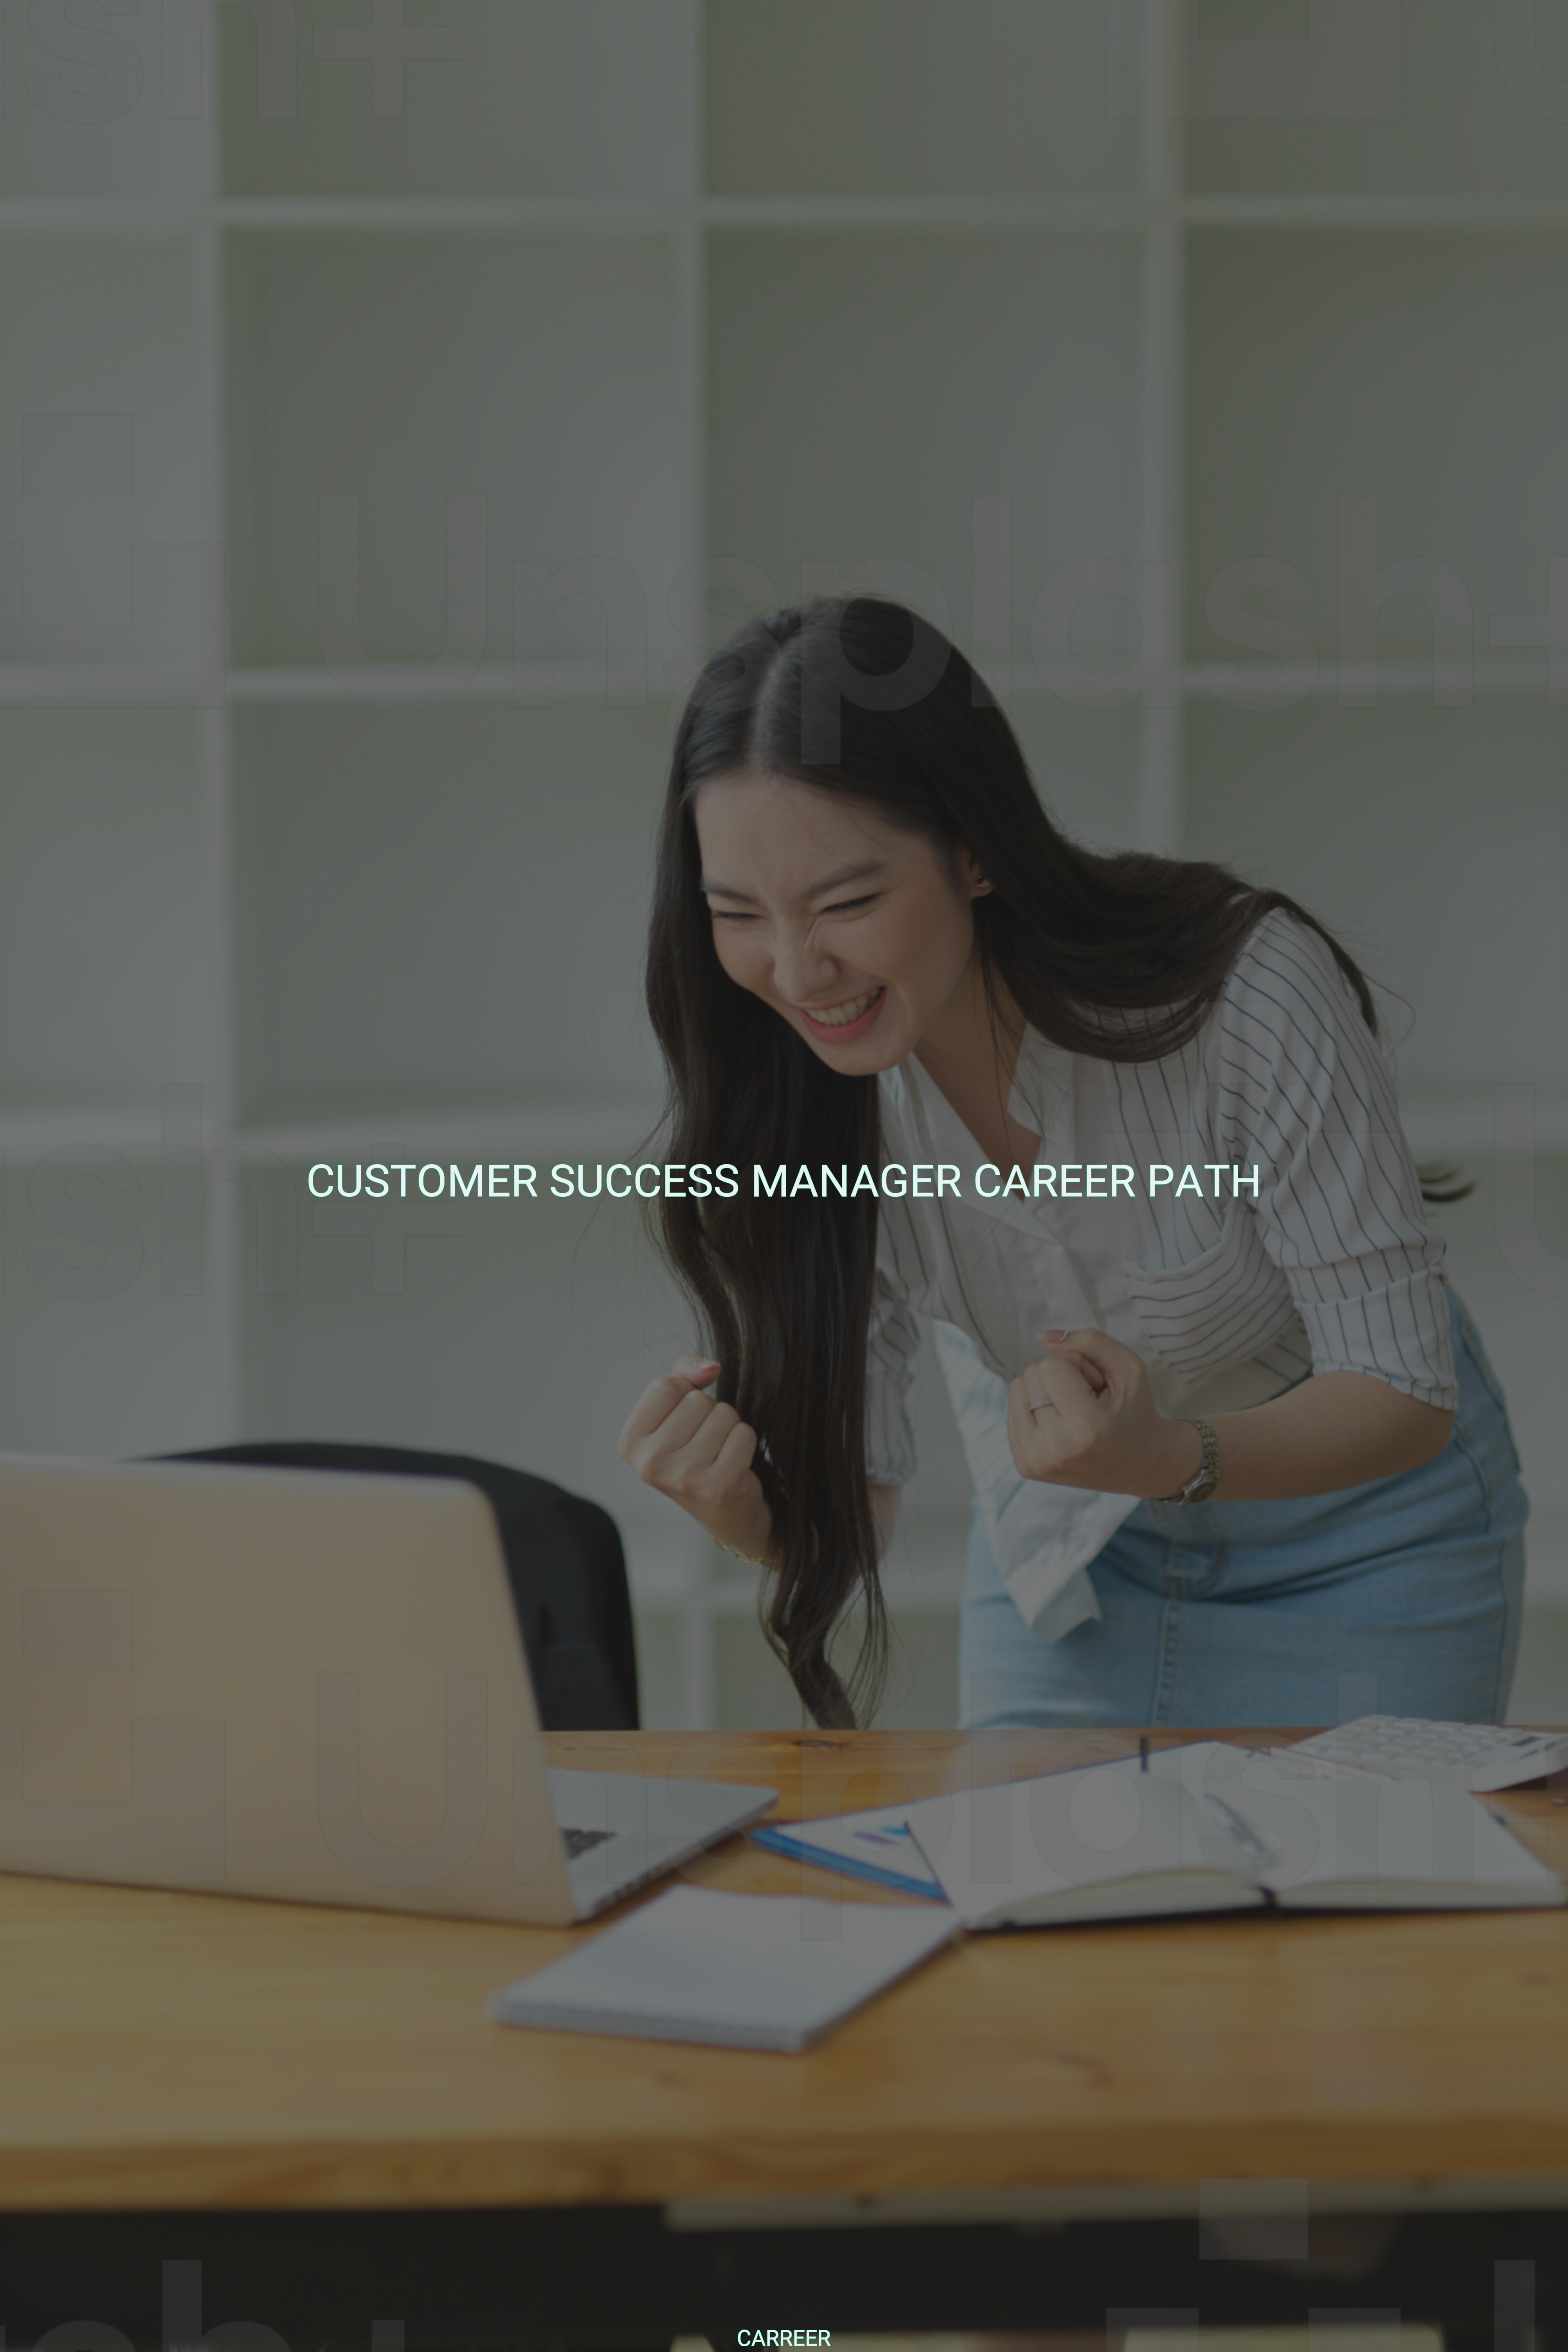 Customer success manager career path